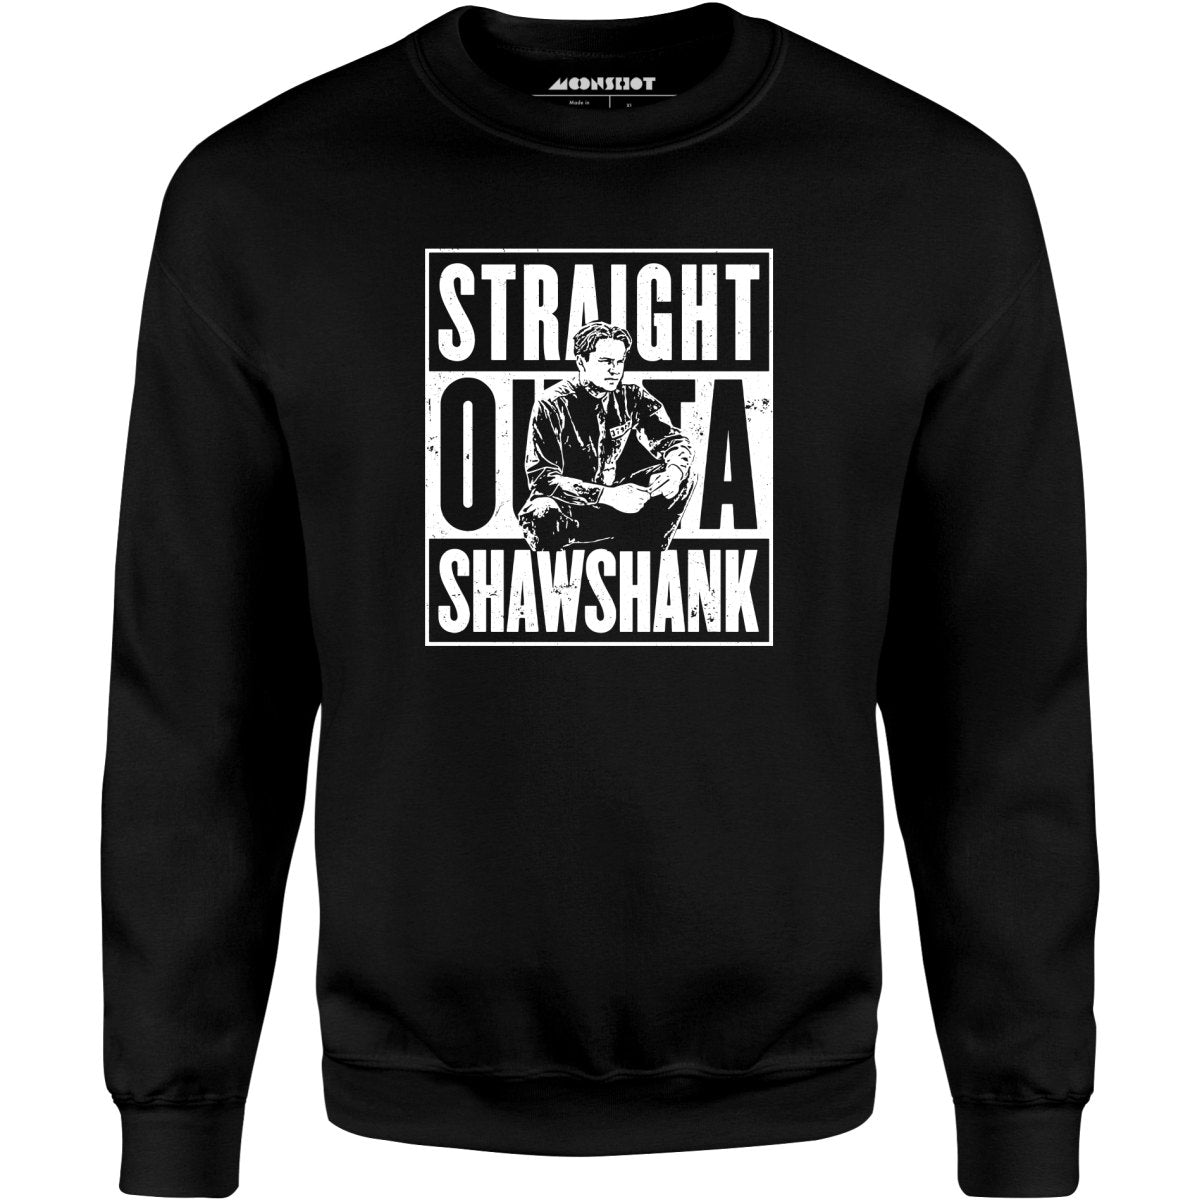 Straight Outta Shawshank - Unisex Sweatshirt